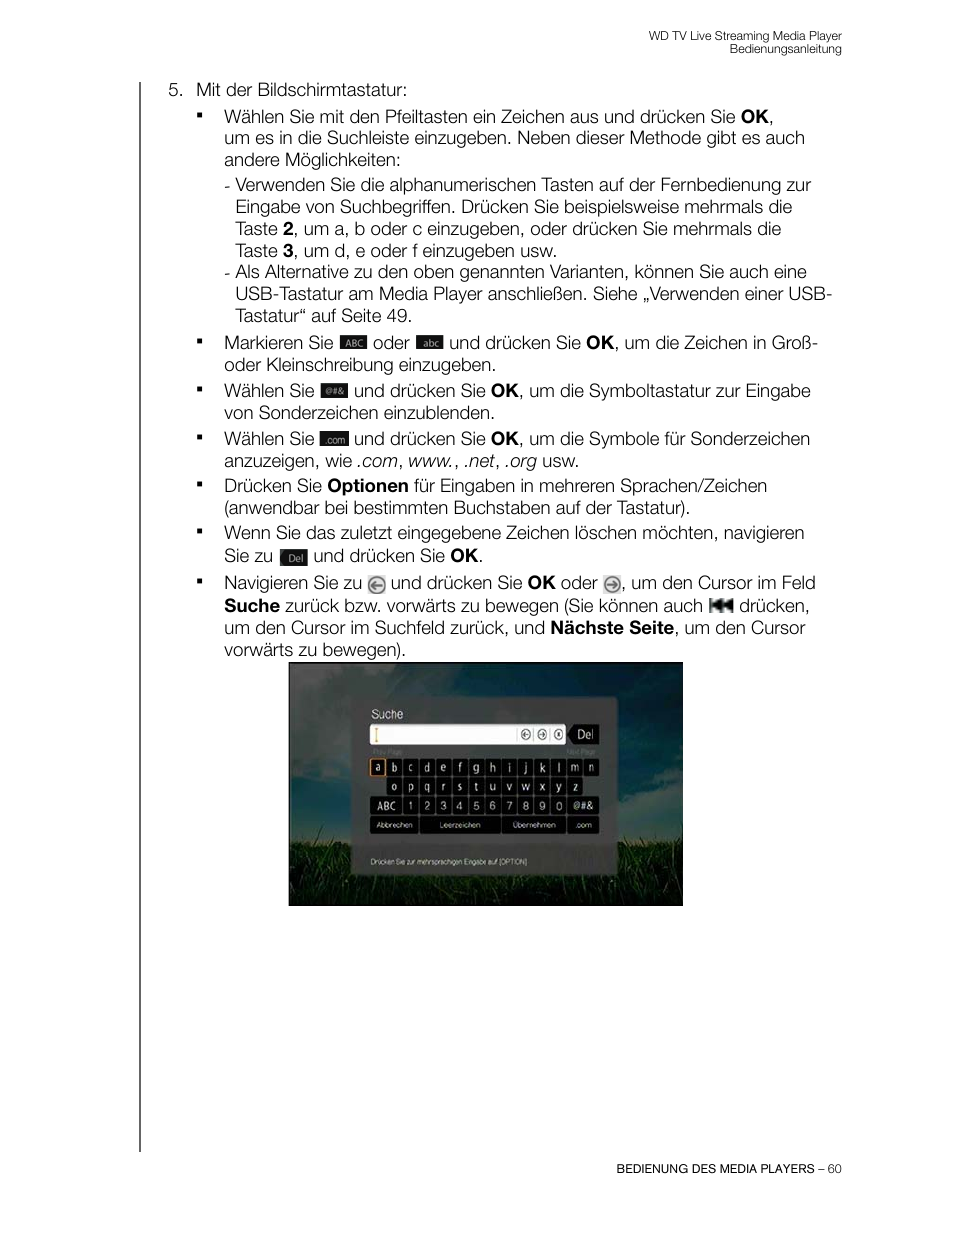 Western Digital WD TV Live Streaming Media Player (Gen 3) User Manual Benutzerhandbuch | Seite 65 / 263